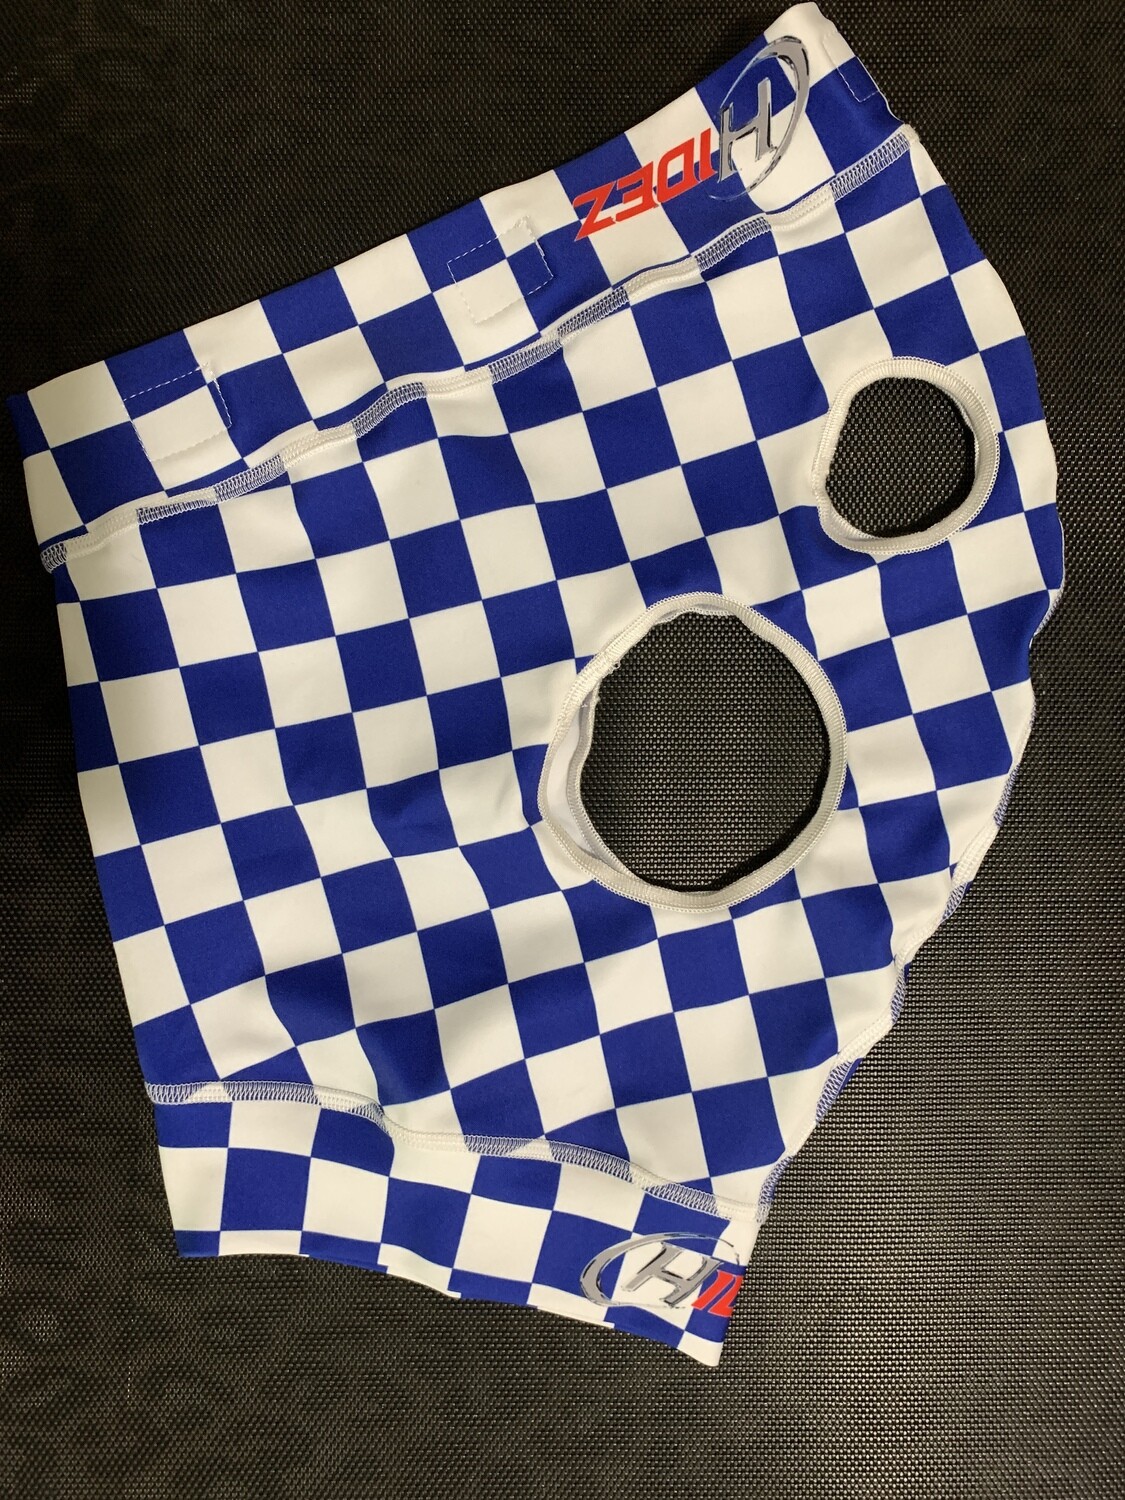 Hidez Printed Mask - medium - in-stock “blue race day” print